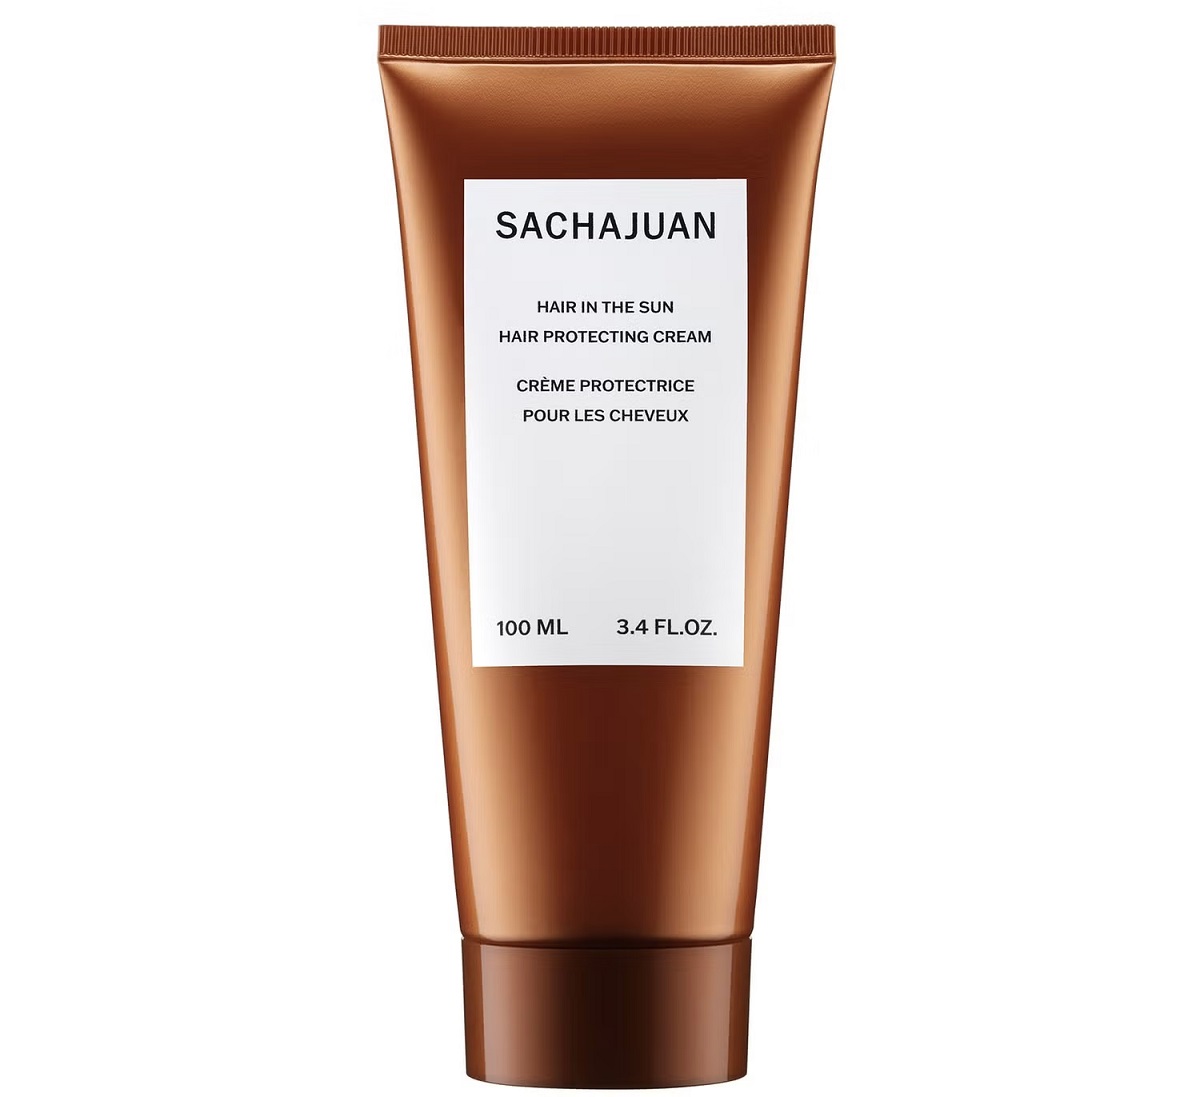 Sachajuan Hair in the Sun Hair Protecting Cream